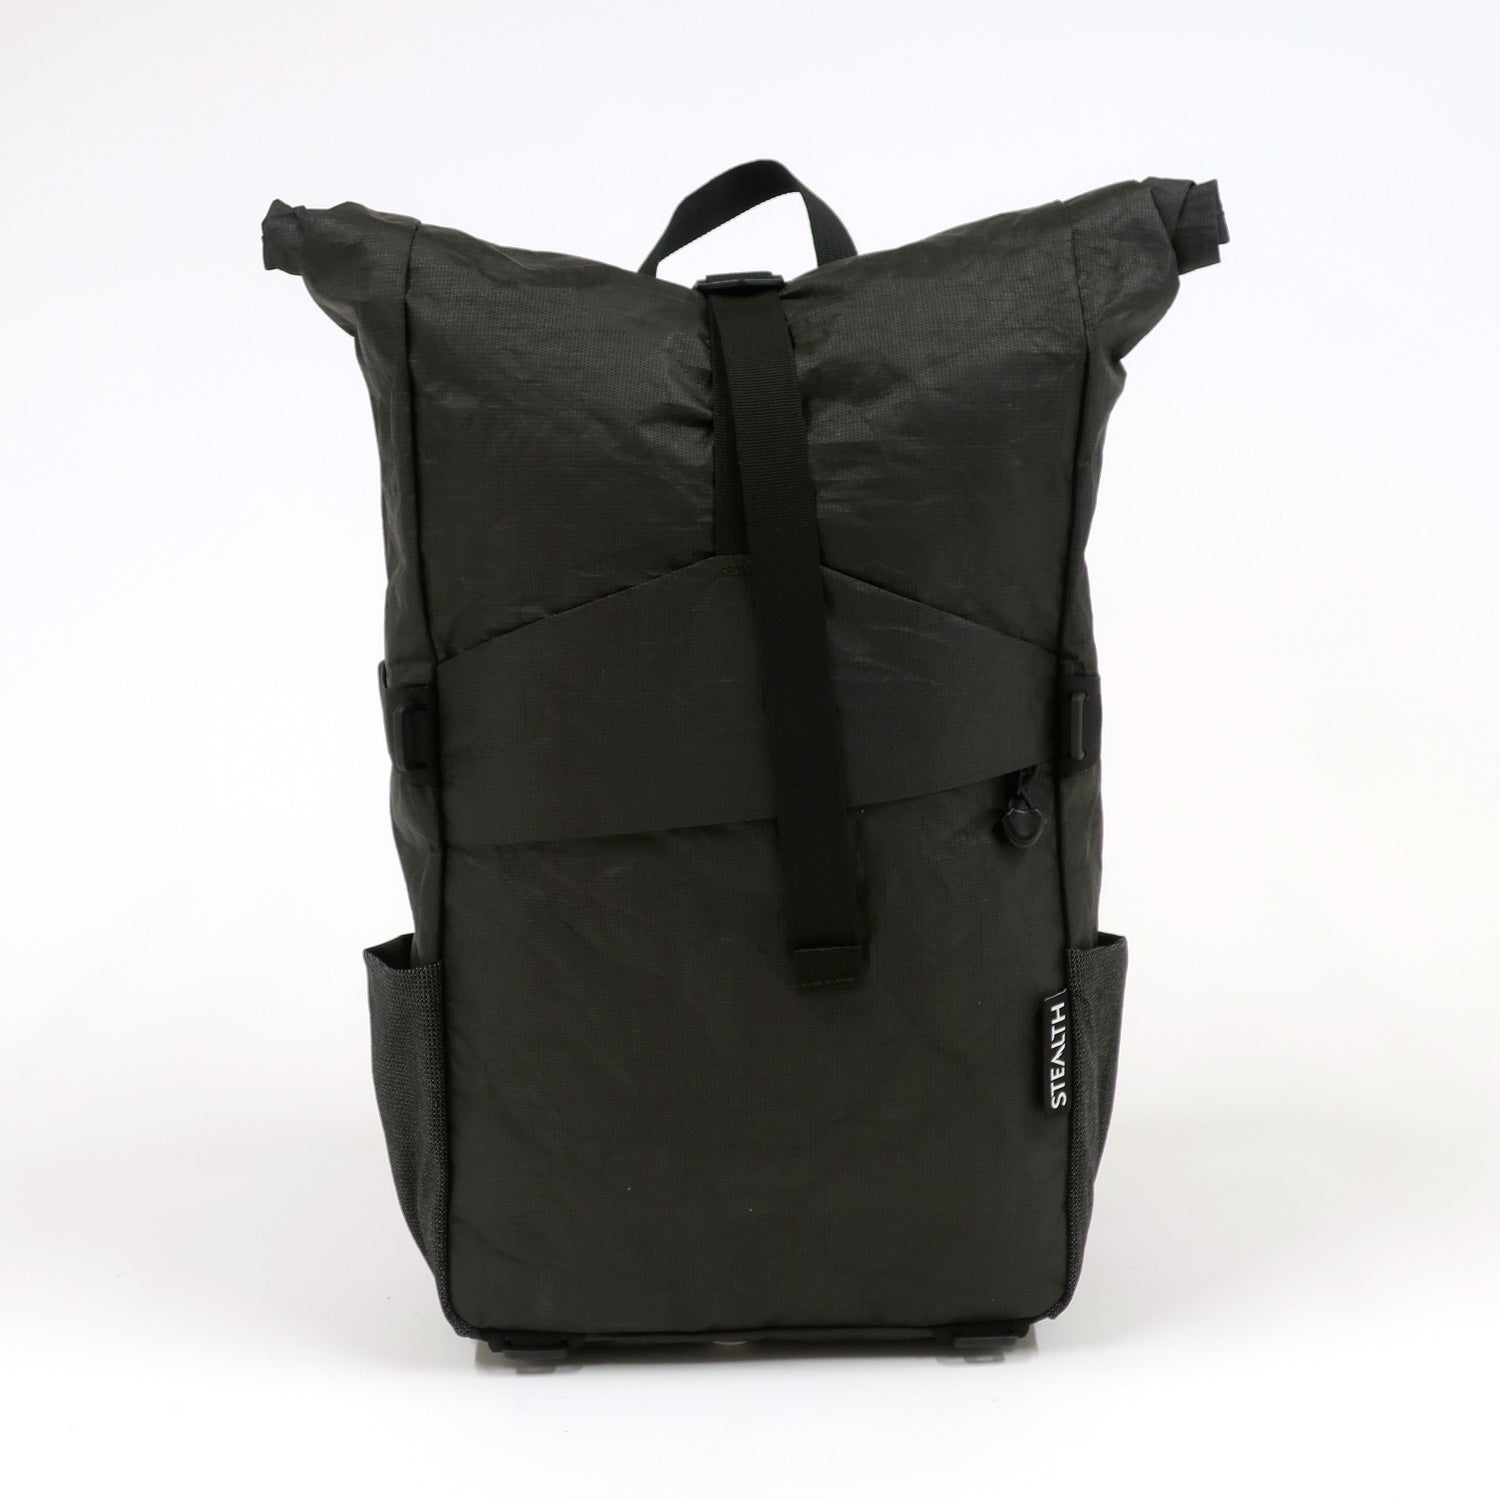 Rata 20 Backpack front